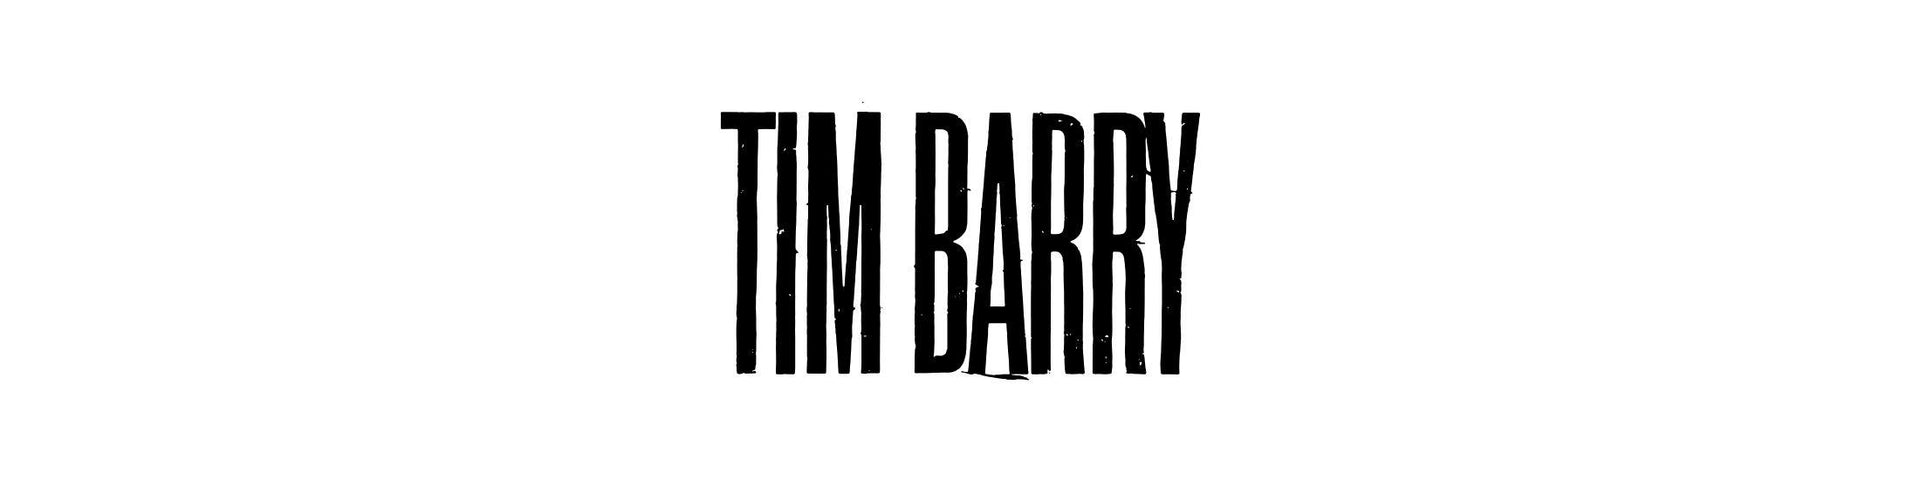 Shop – Tim Barry – Band & Music Merch – Cold Cuts Merch